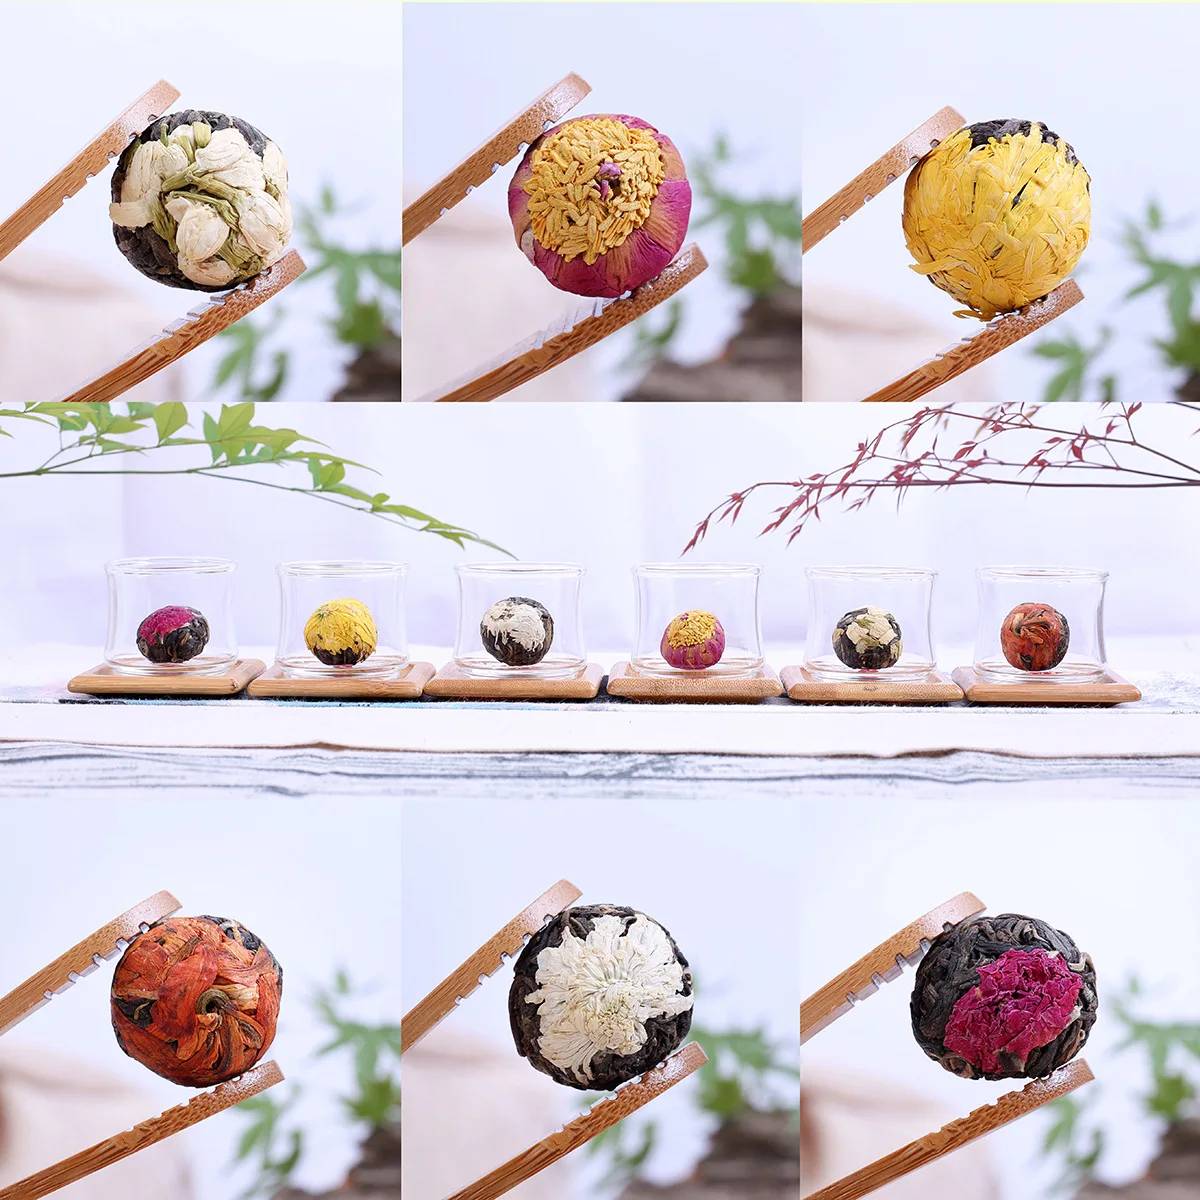 
Chinese Beautiful Blooming Tea Different Kinds of Blooming Tea Ball Handmade Packaging Organic Detox Flower Tea Ball 